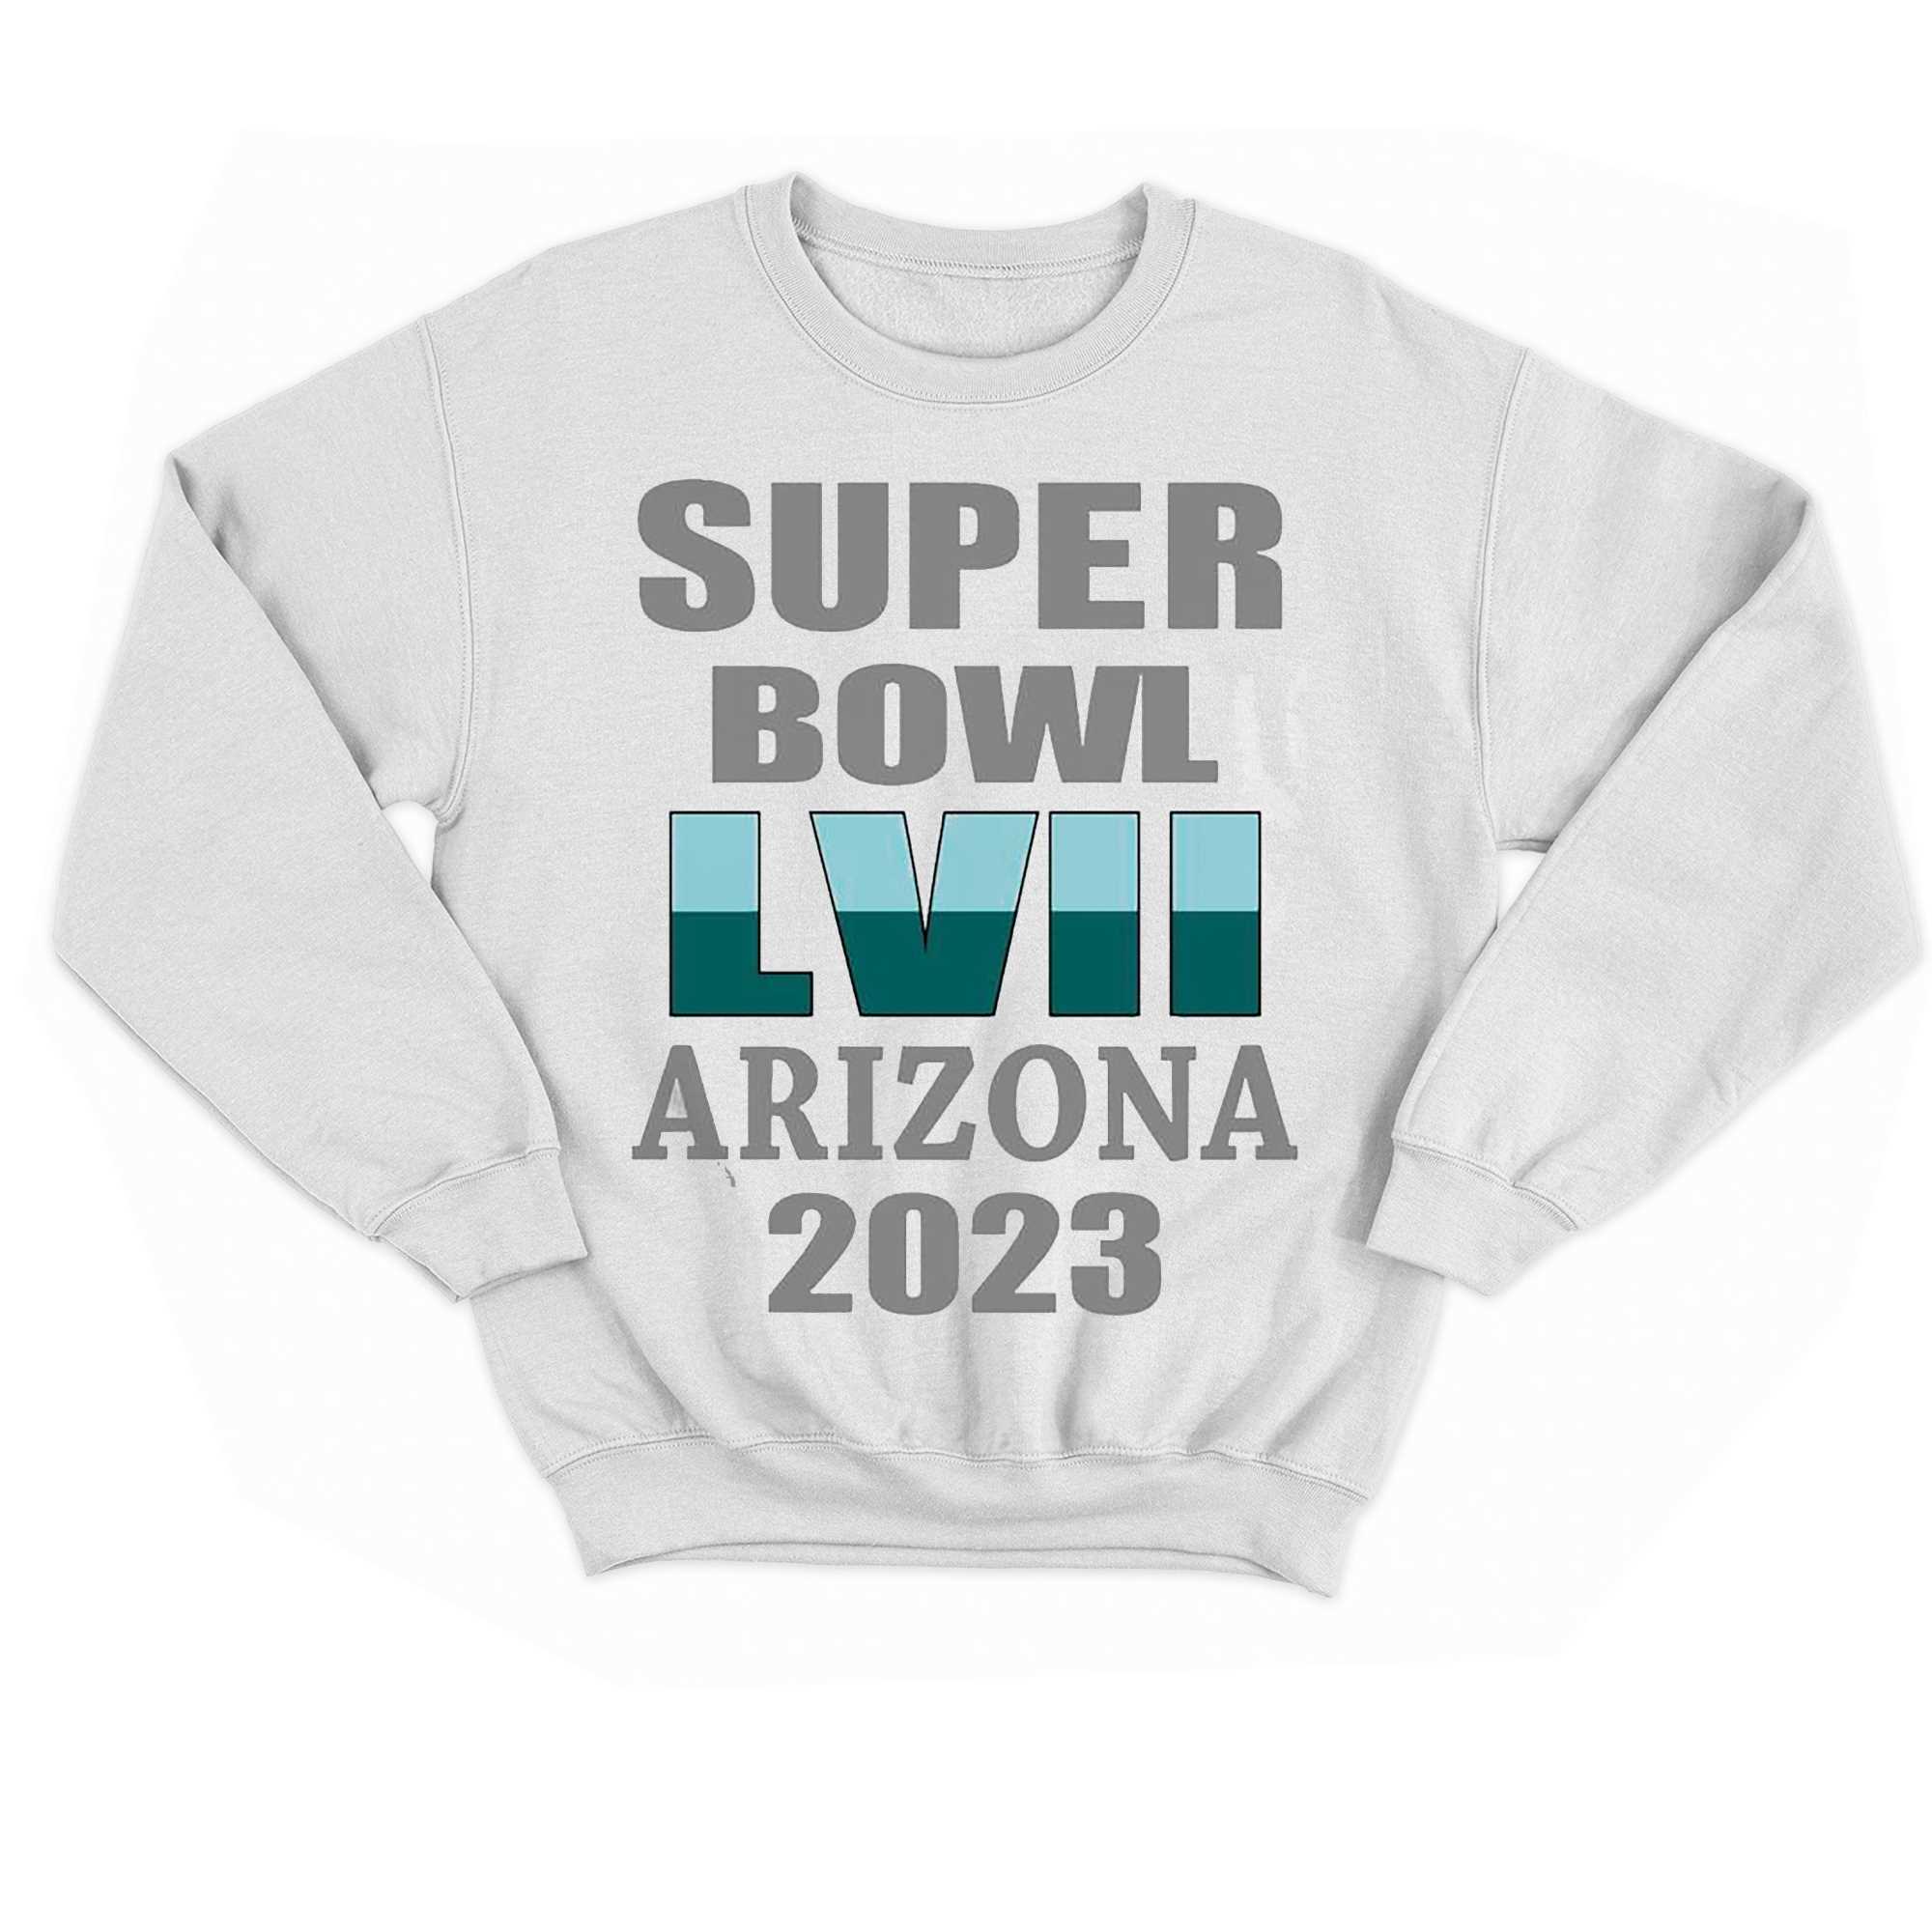 Super Bowl Lvii Arizona 2023 Shirt 